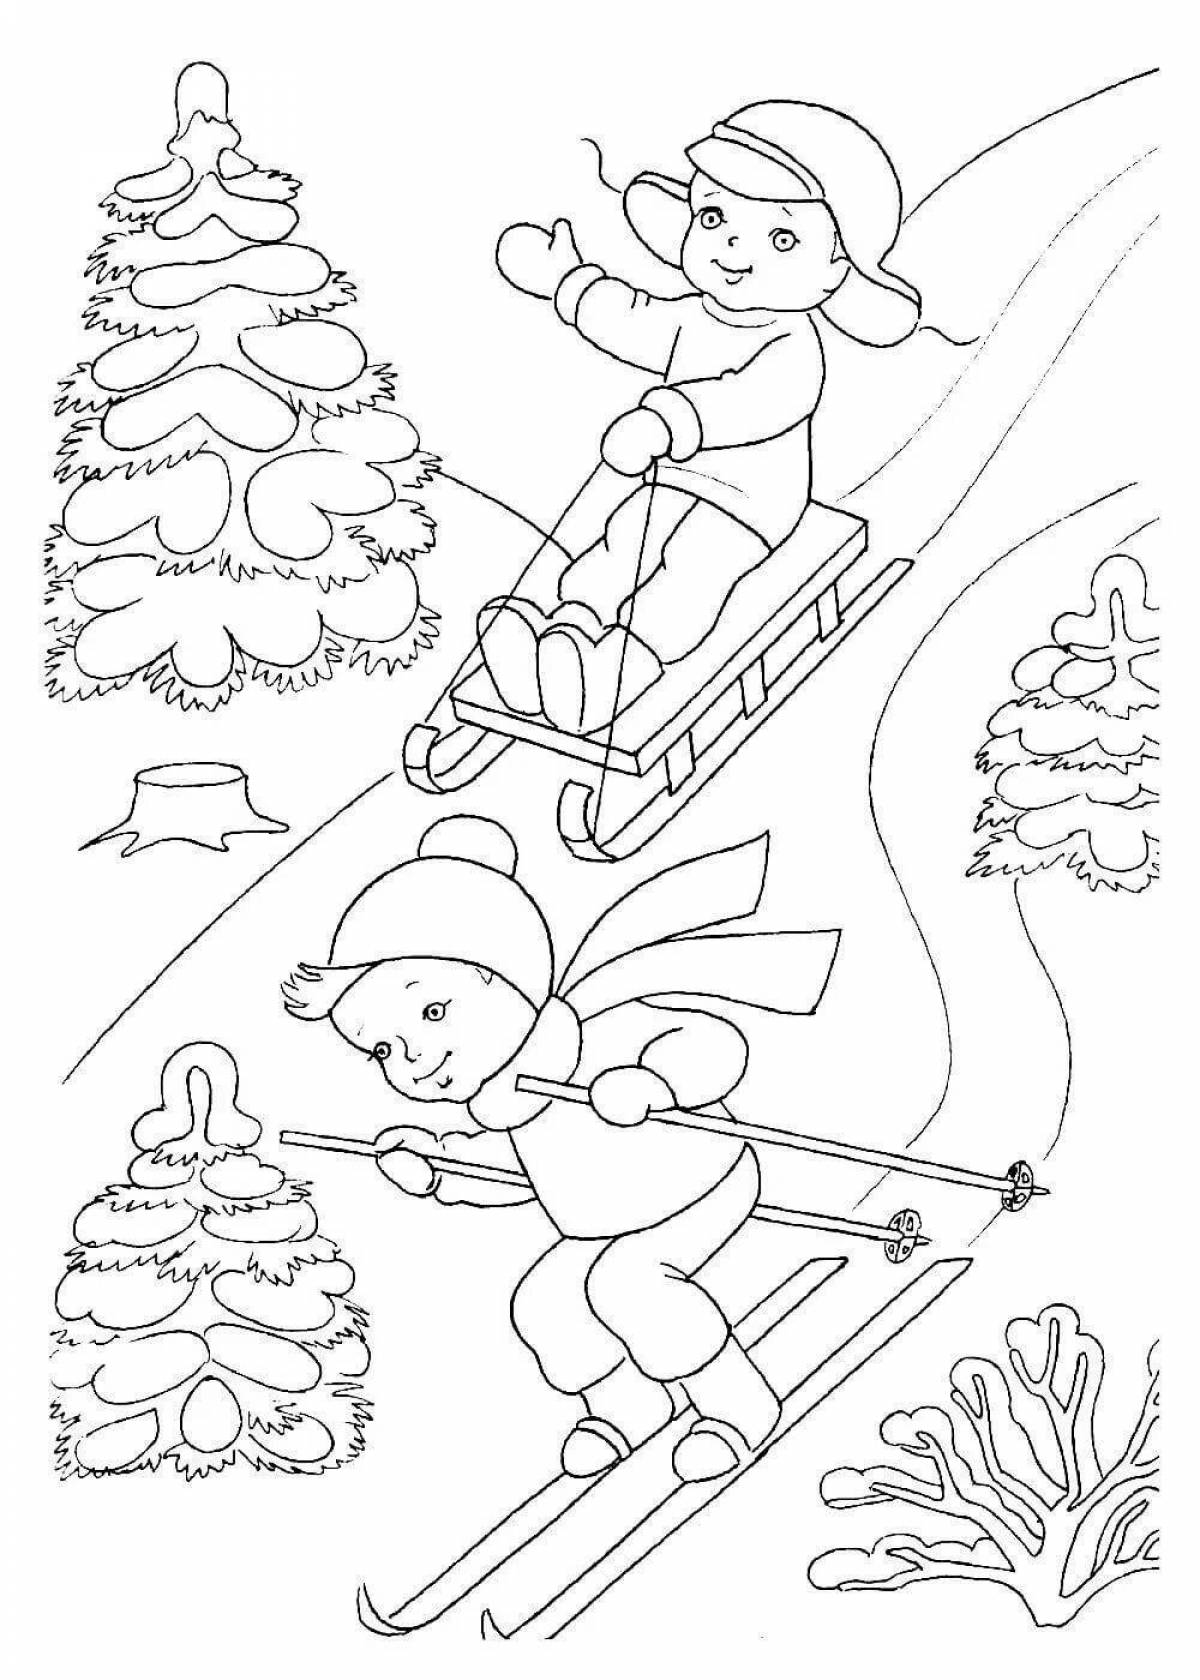 Charming coloring drawing winter fun prep group